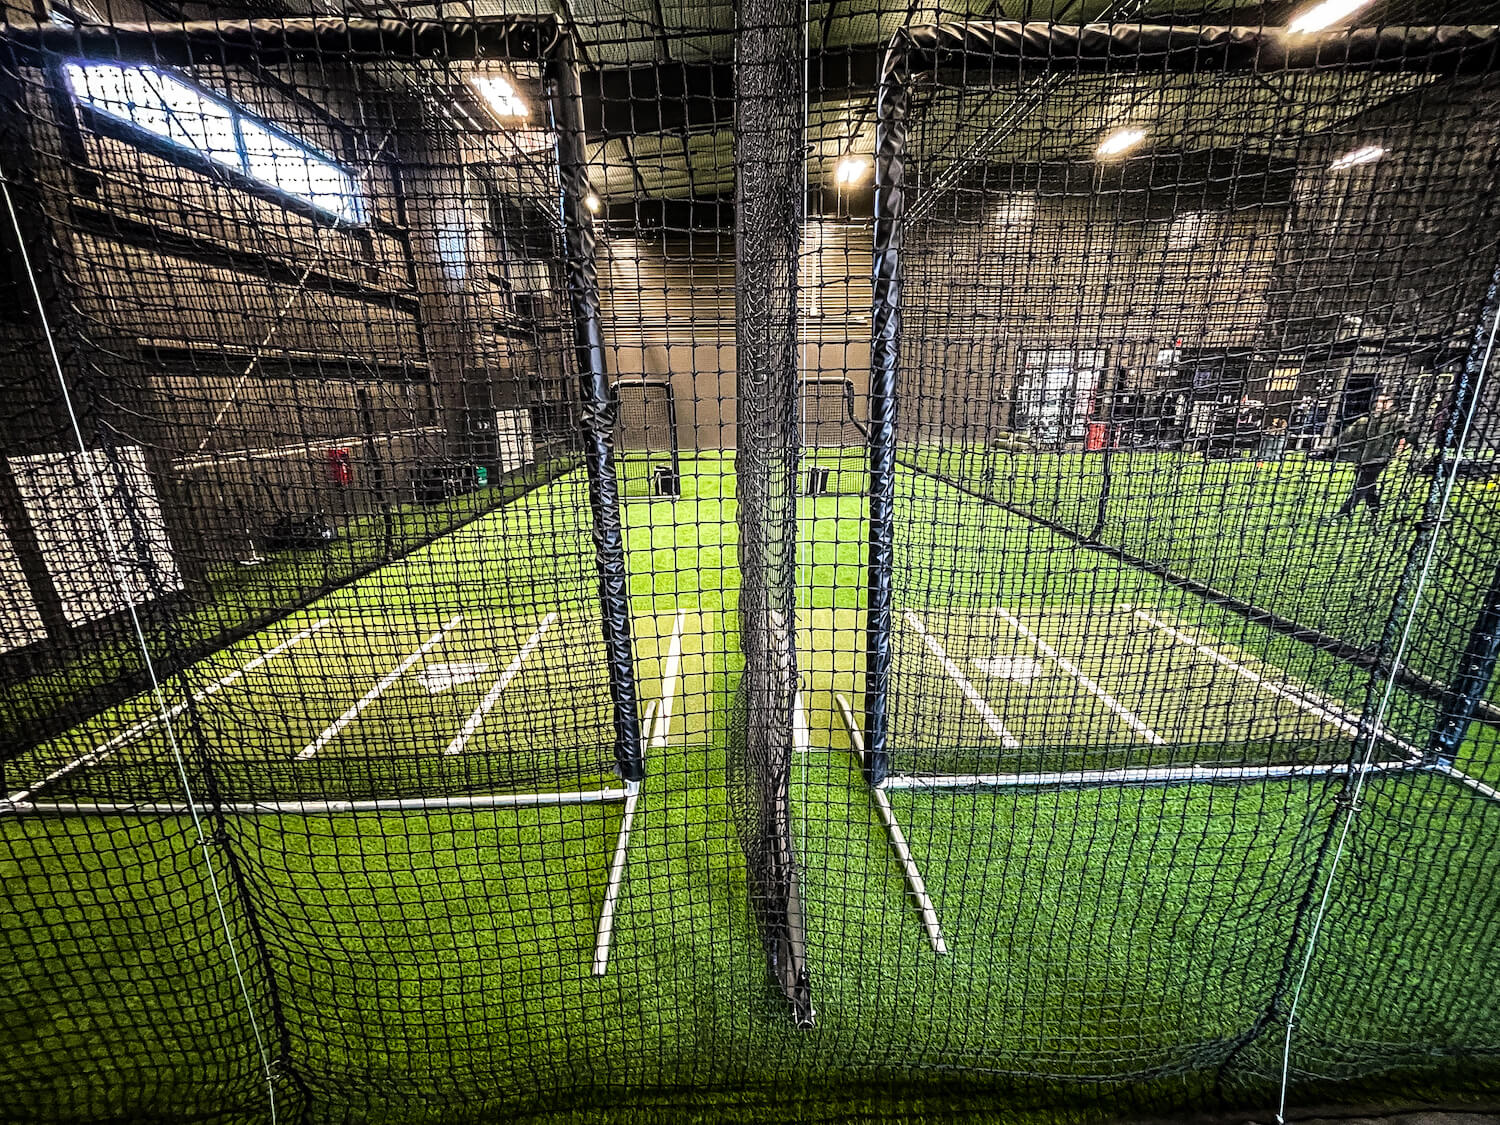 Indoor batting cages